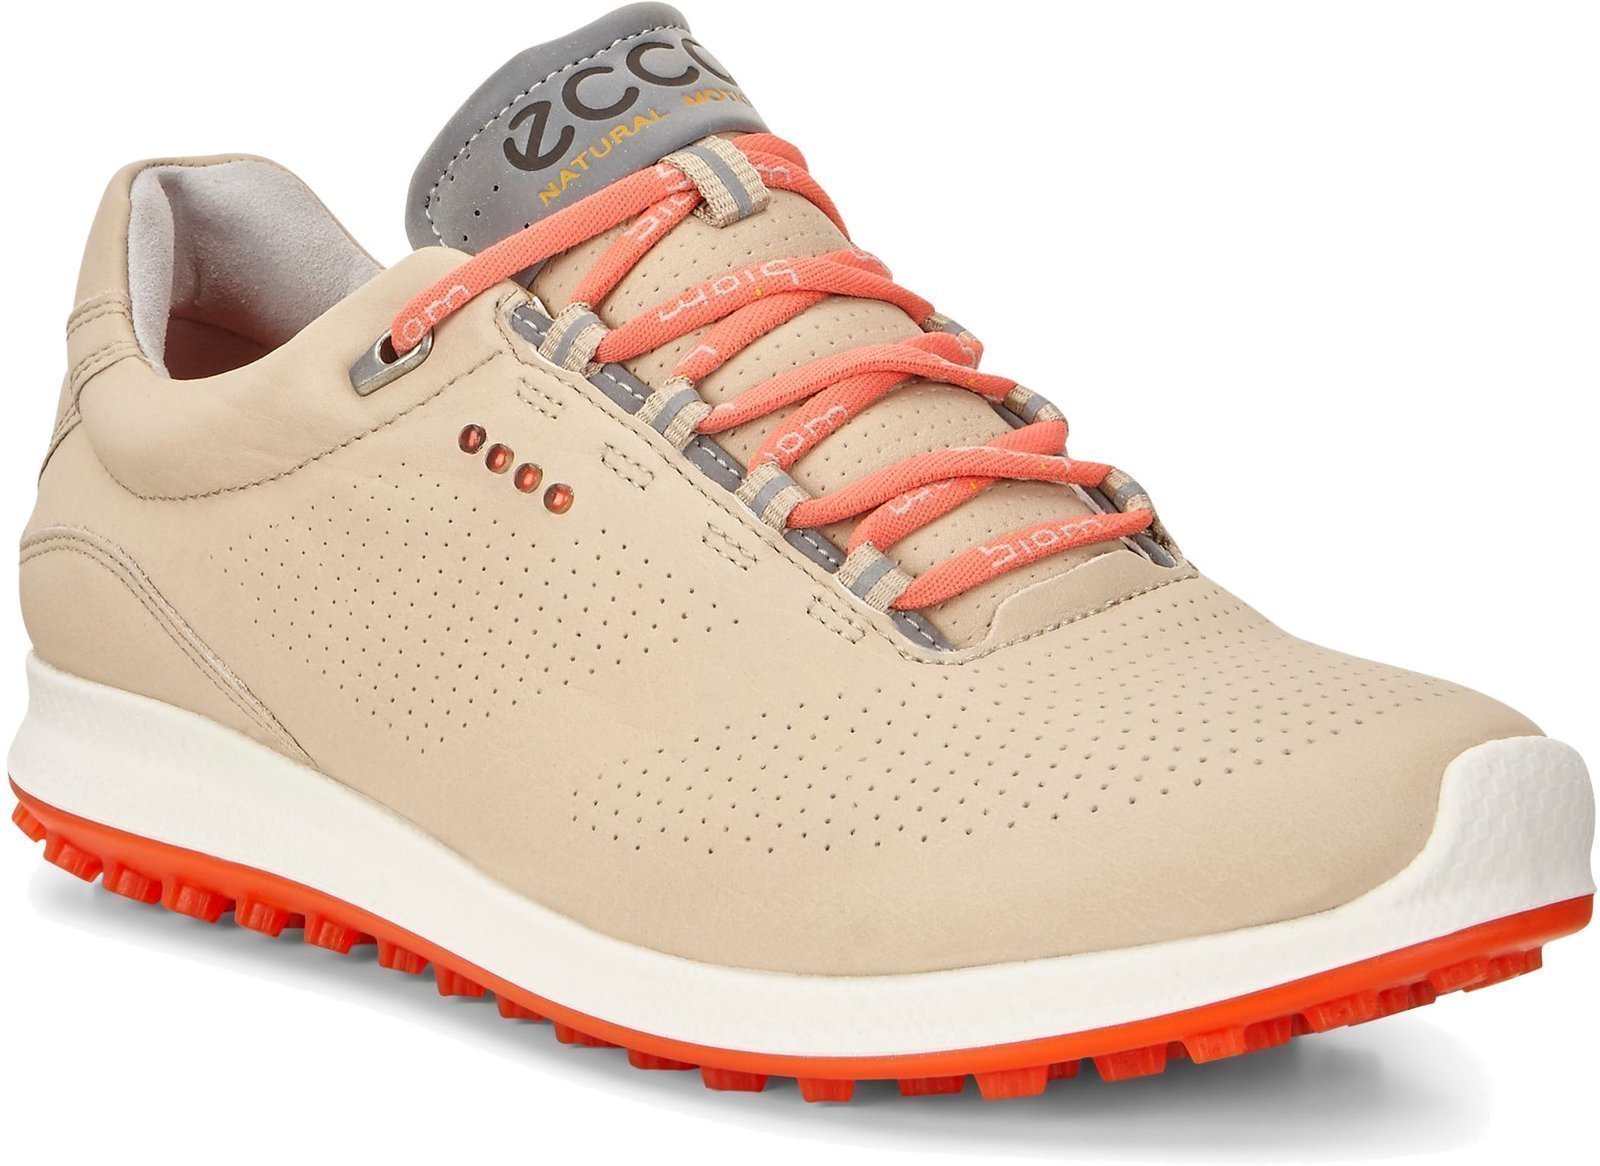 Chaussures de golf pour femmes Ecco Biom Hybrid 2 Chaussures de Golf Femmes Oyester/Coral Blush 42